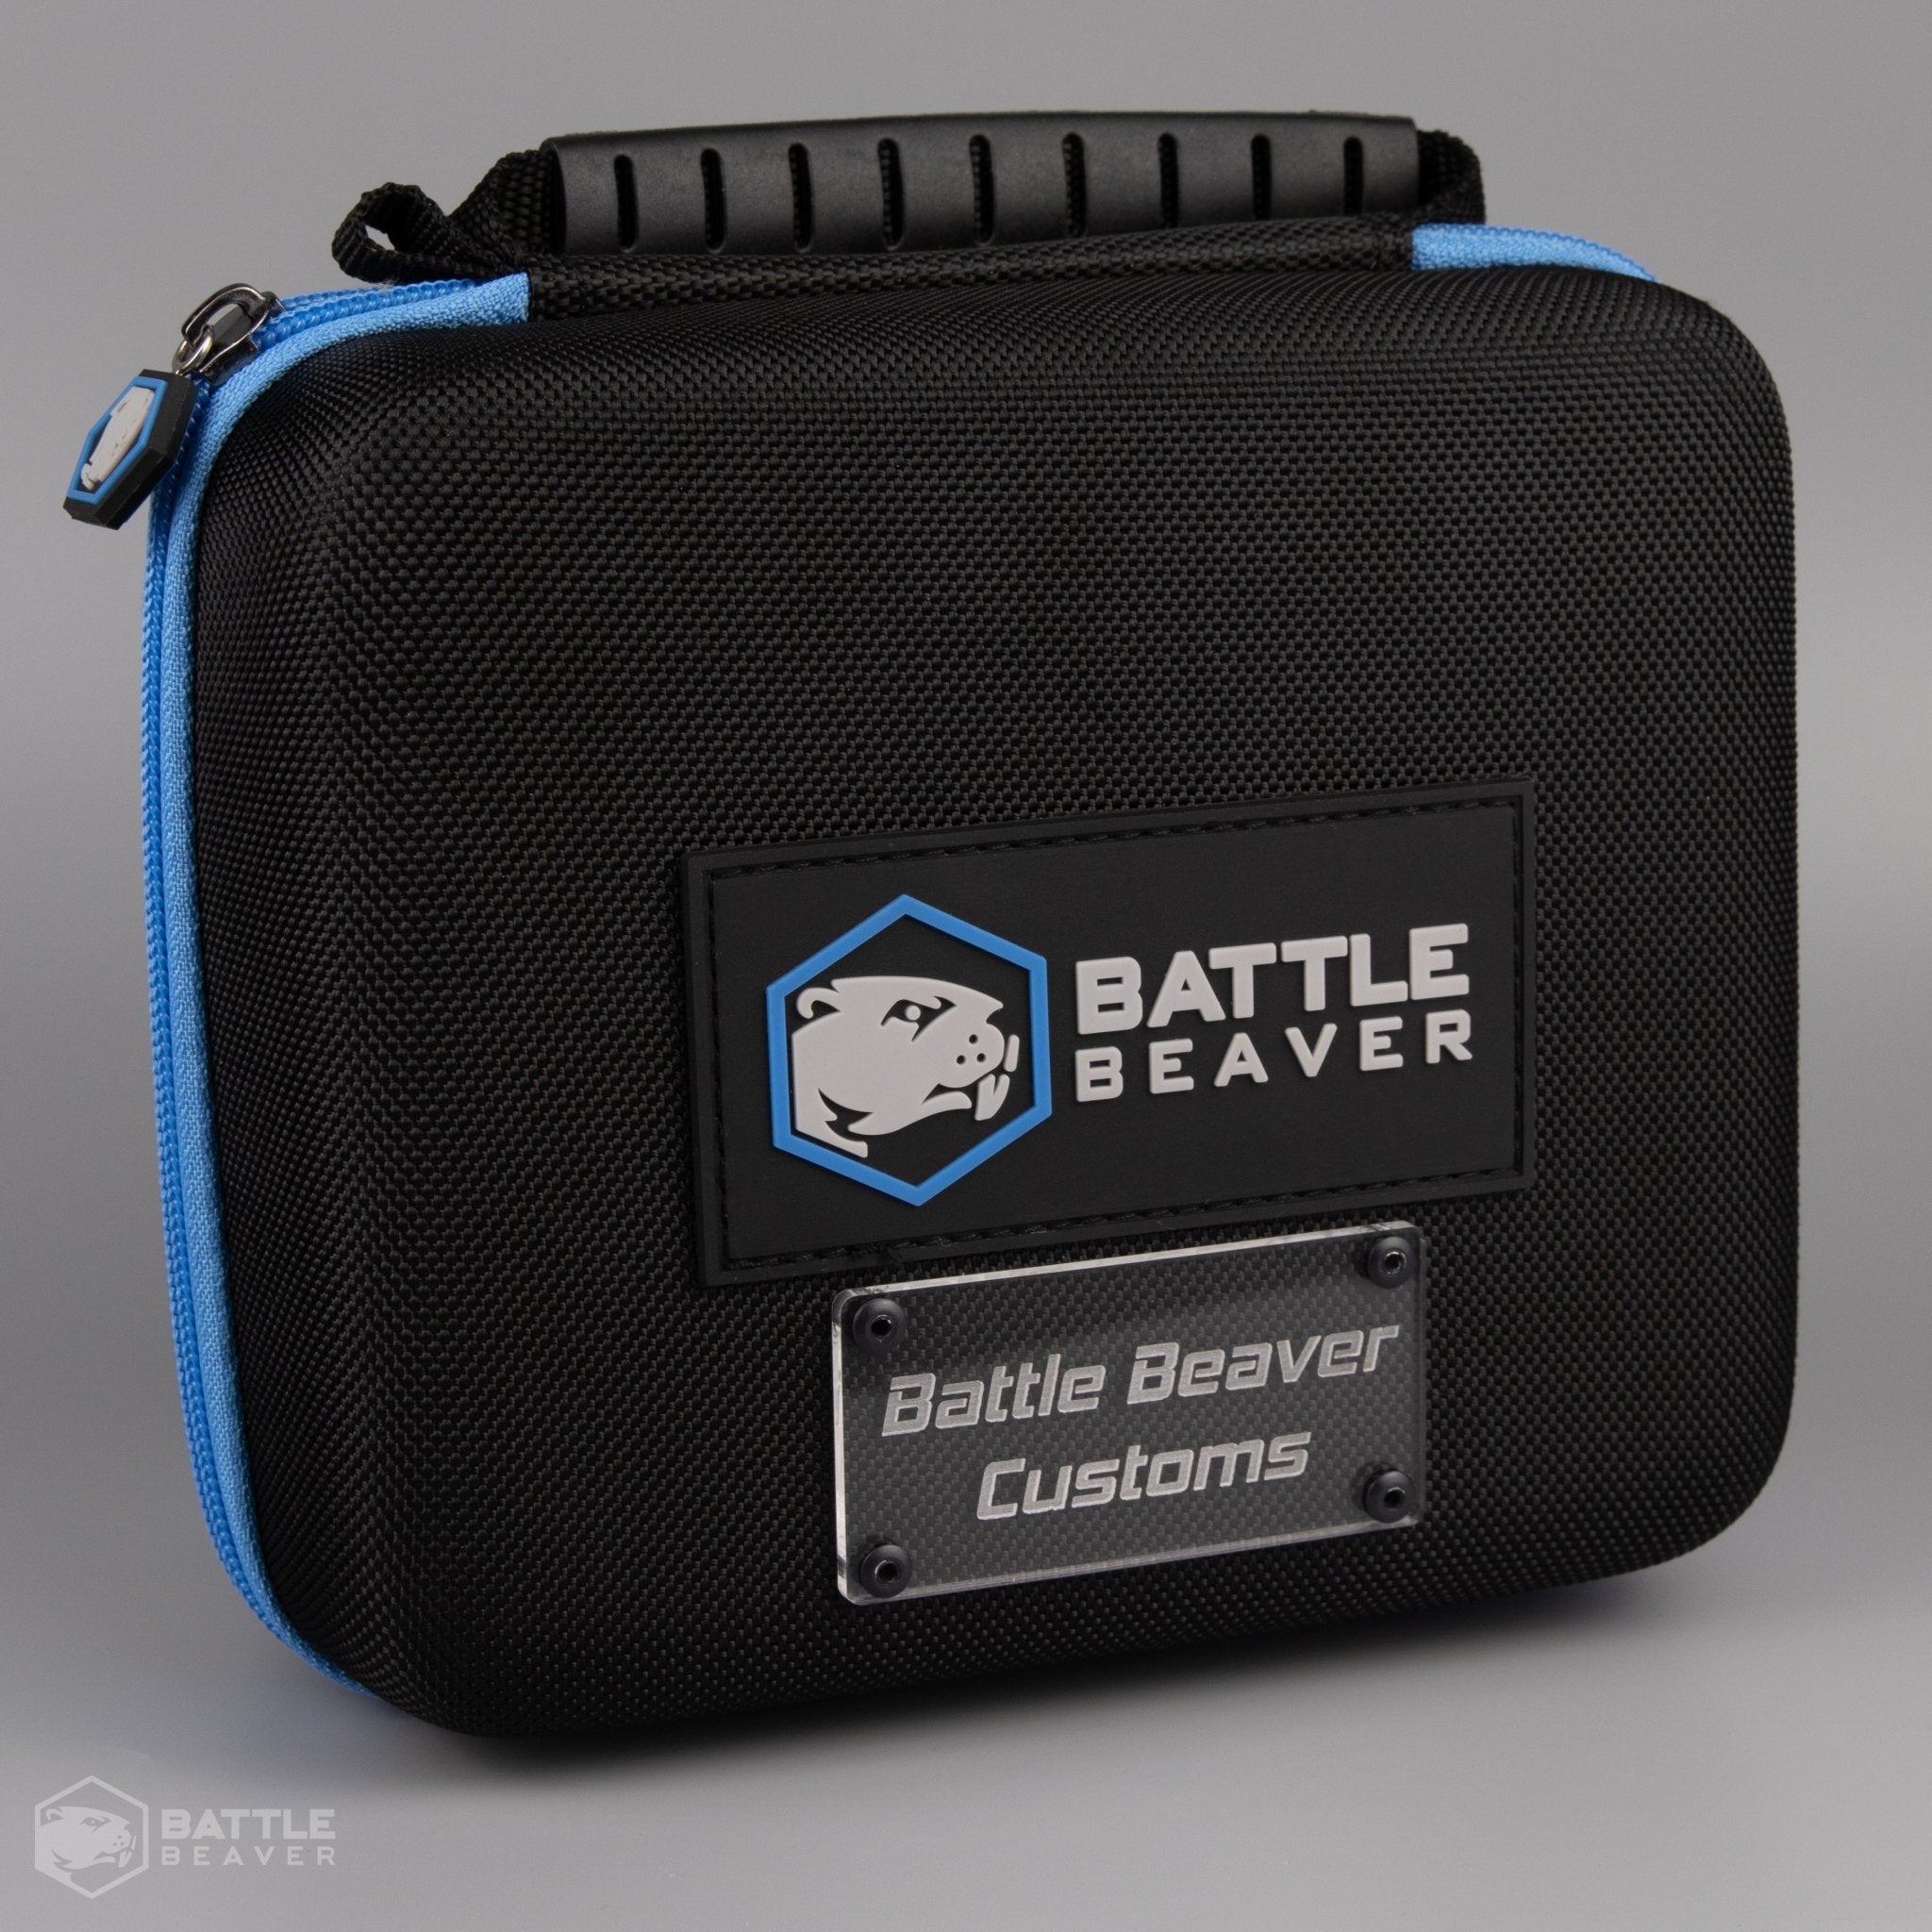 Gamecube Protective Case (New) - Battle Beaver Customs -